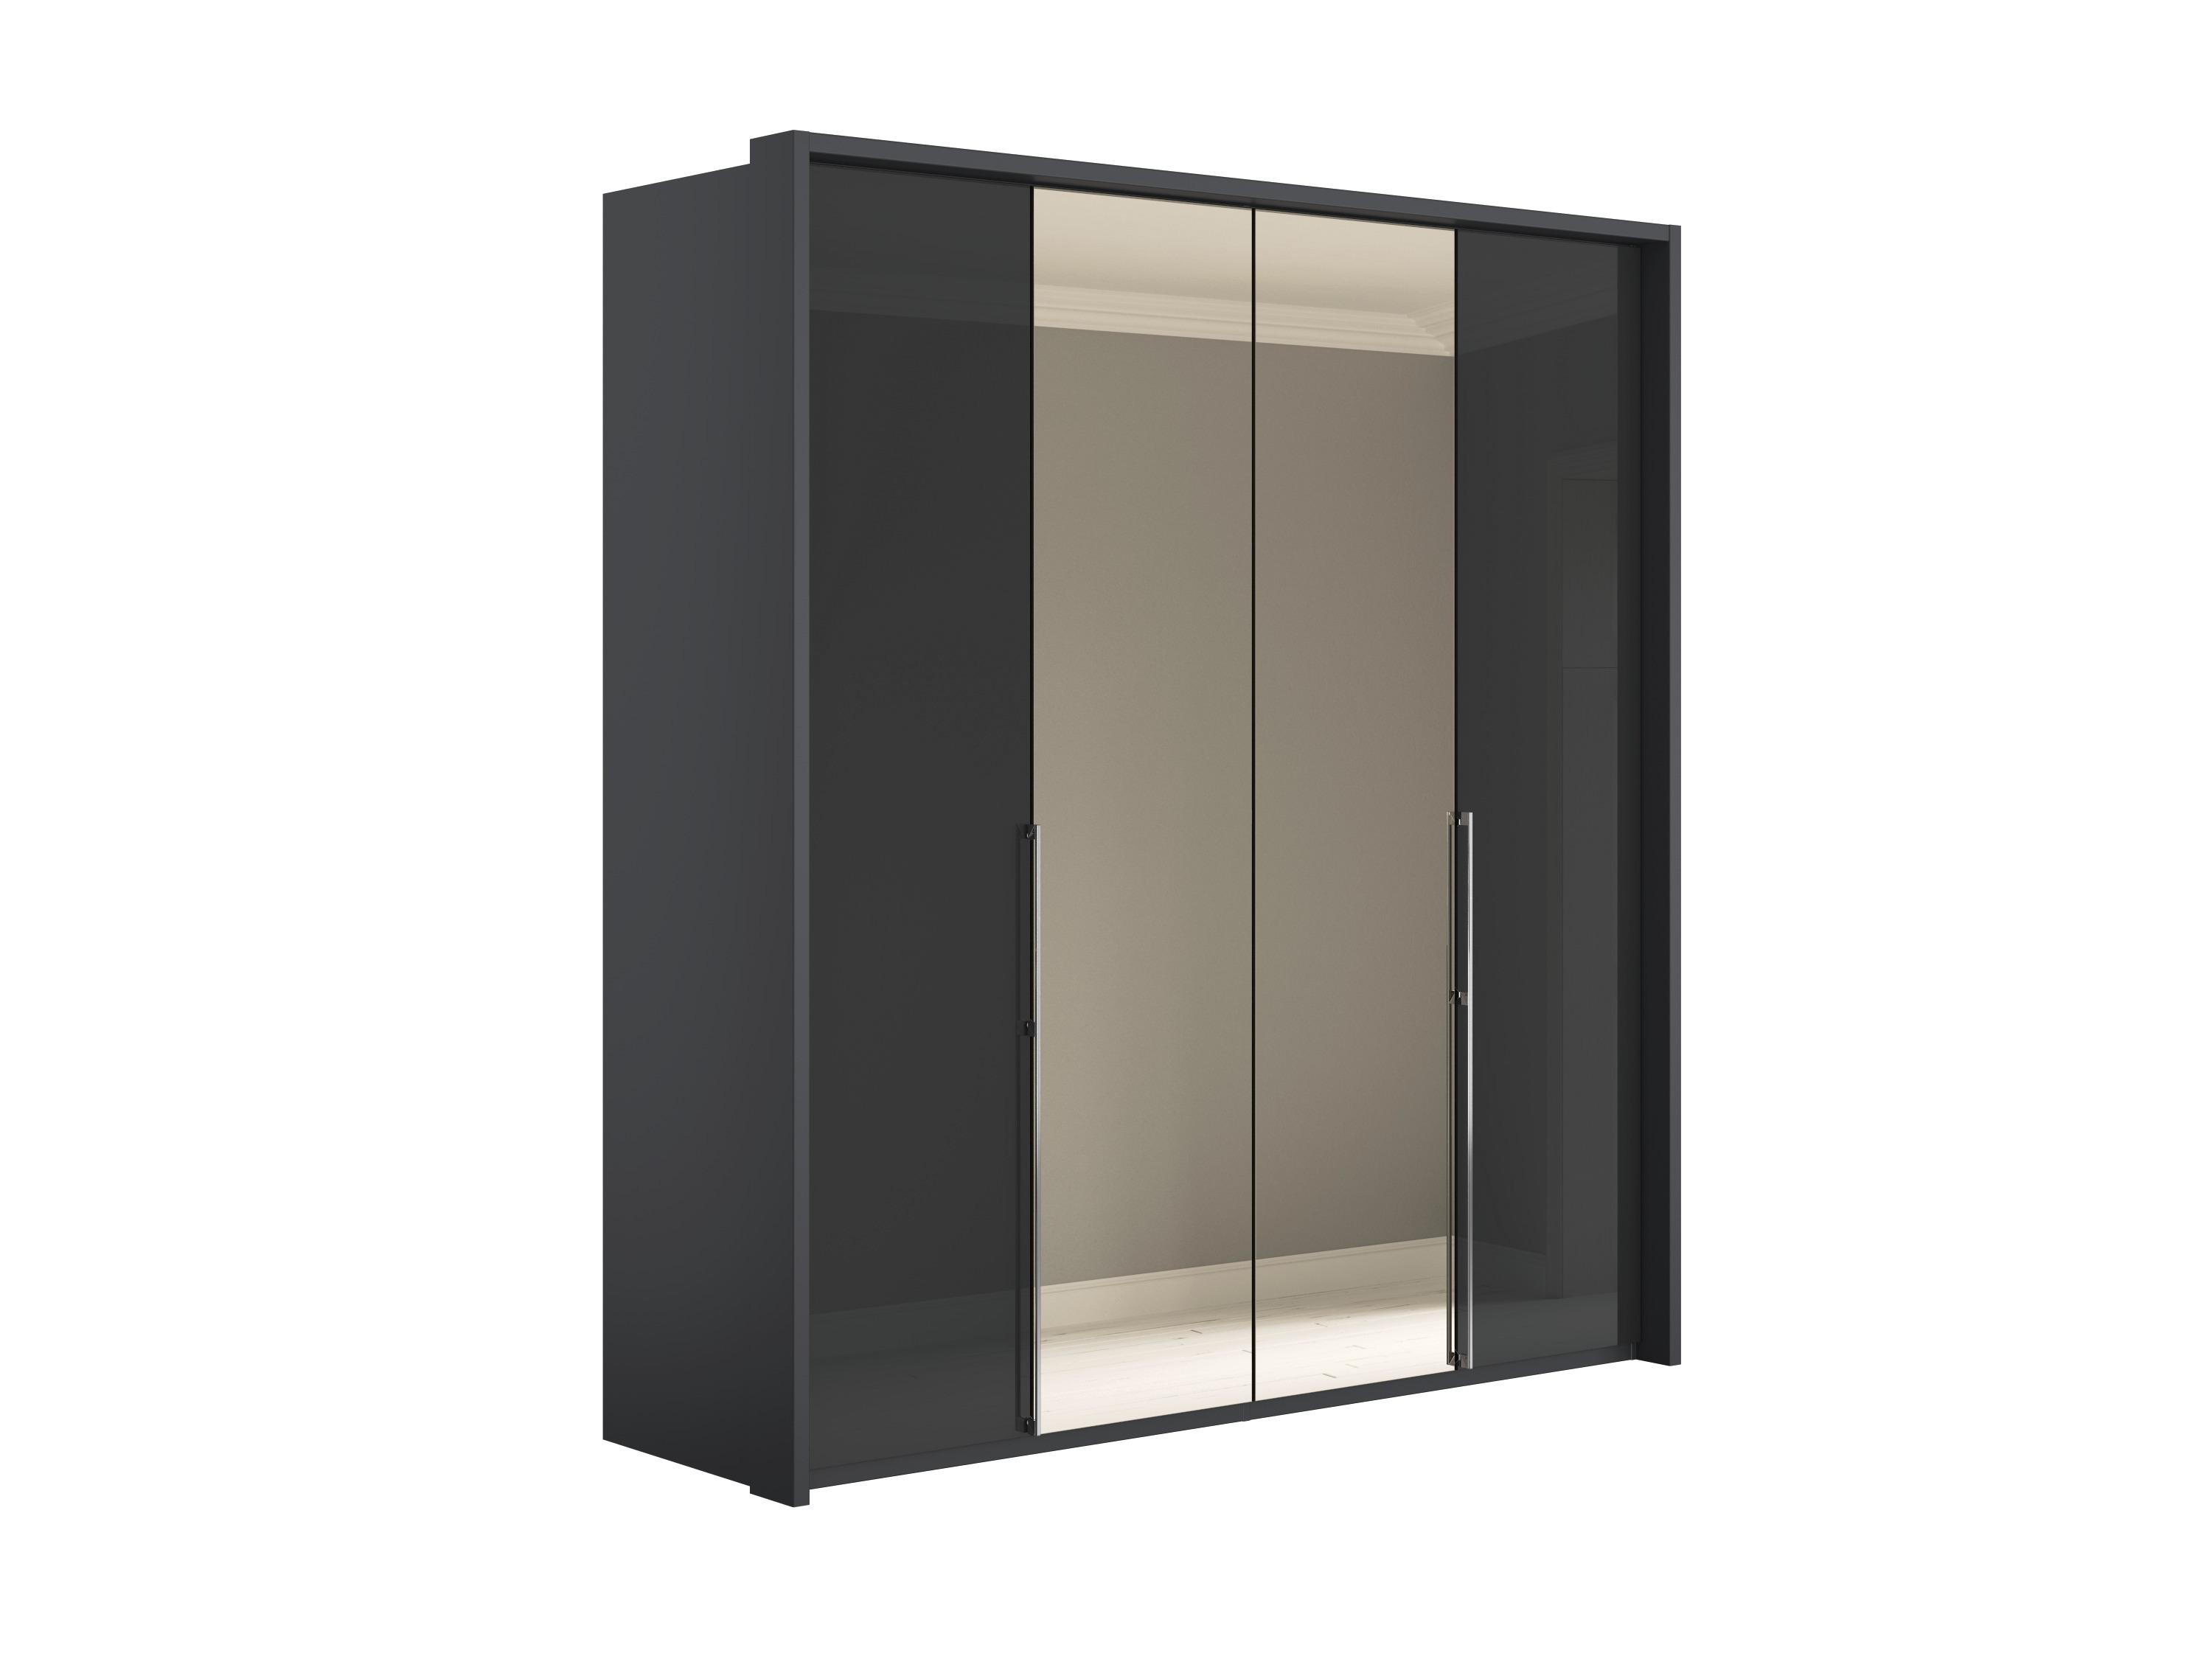 Pacifica 2 206cm 4 Door Bifold Wardrobe with 2 Mirror Doors in Graphite/Glass Graphite on Furniture Village